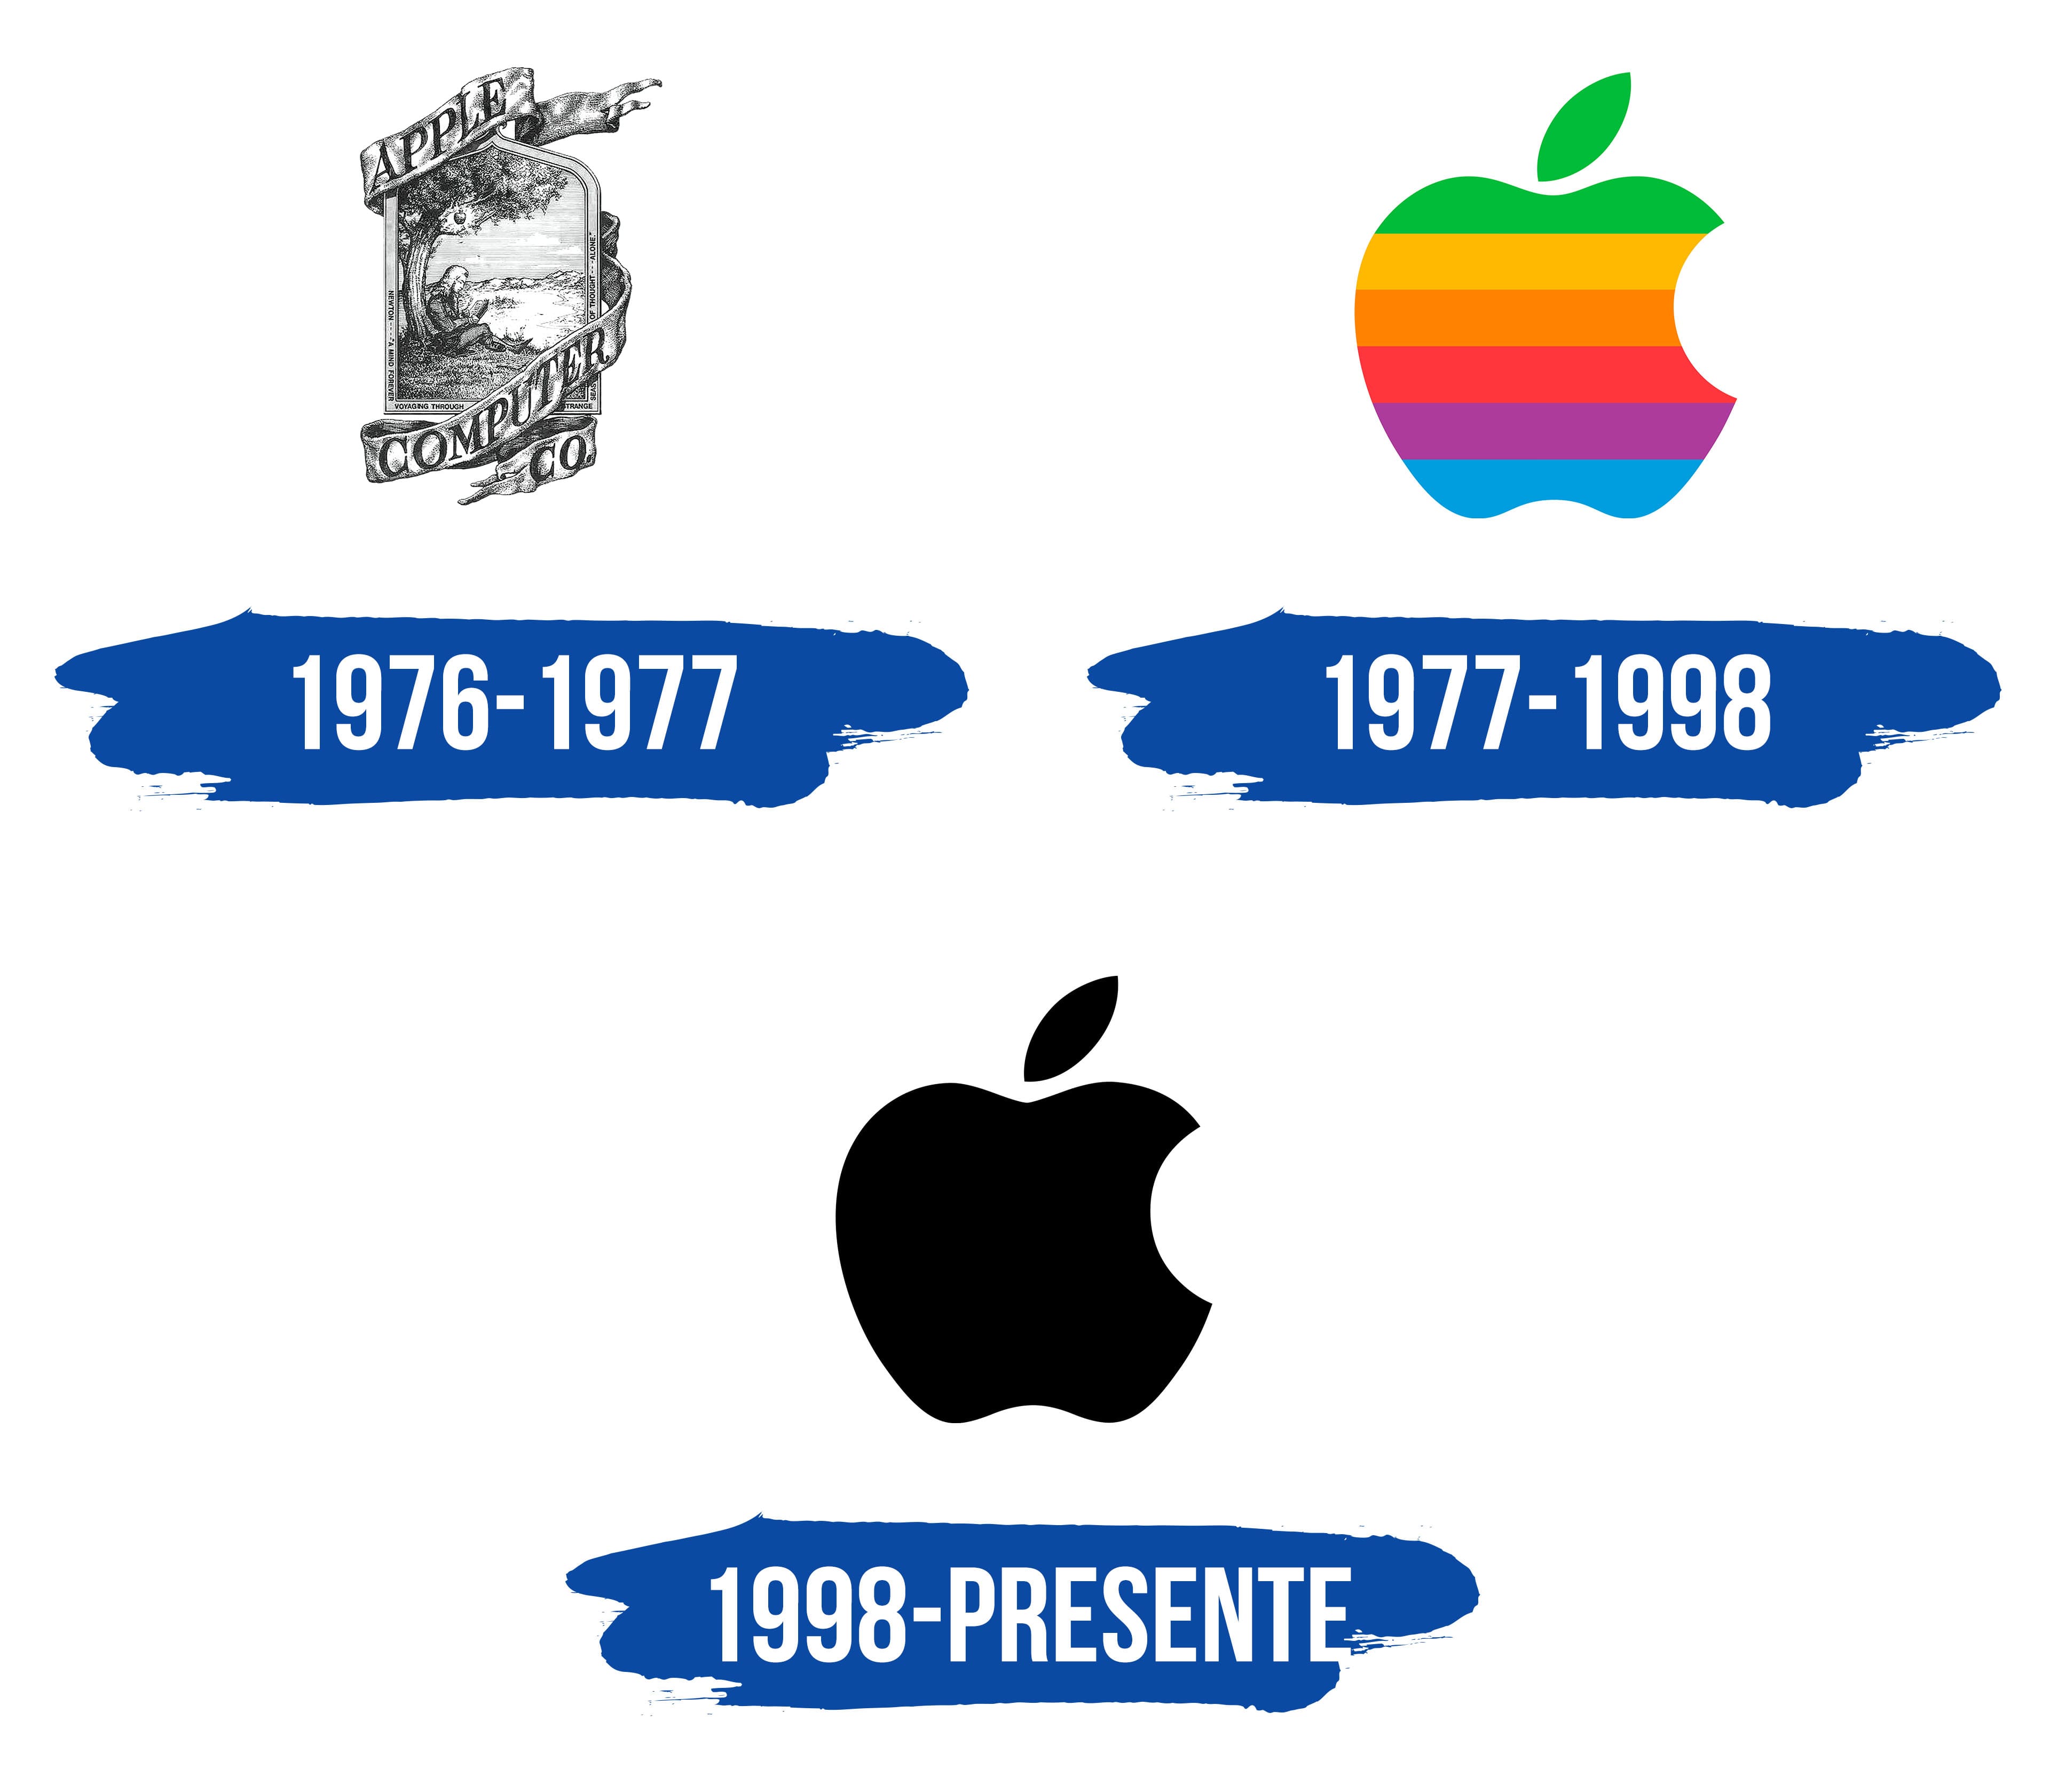 El top 100 imagen historia de el logo de apple - Abzlocal.mx